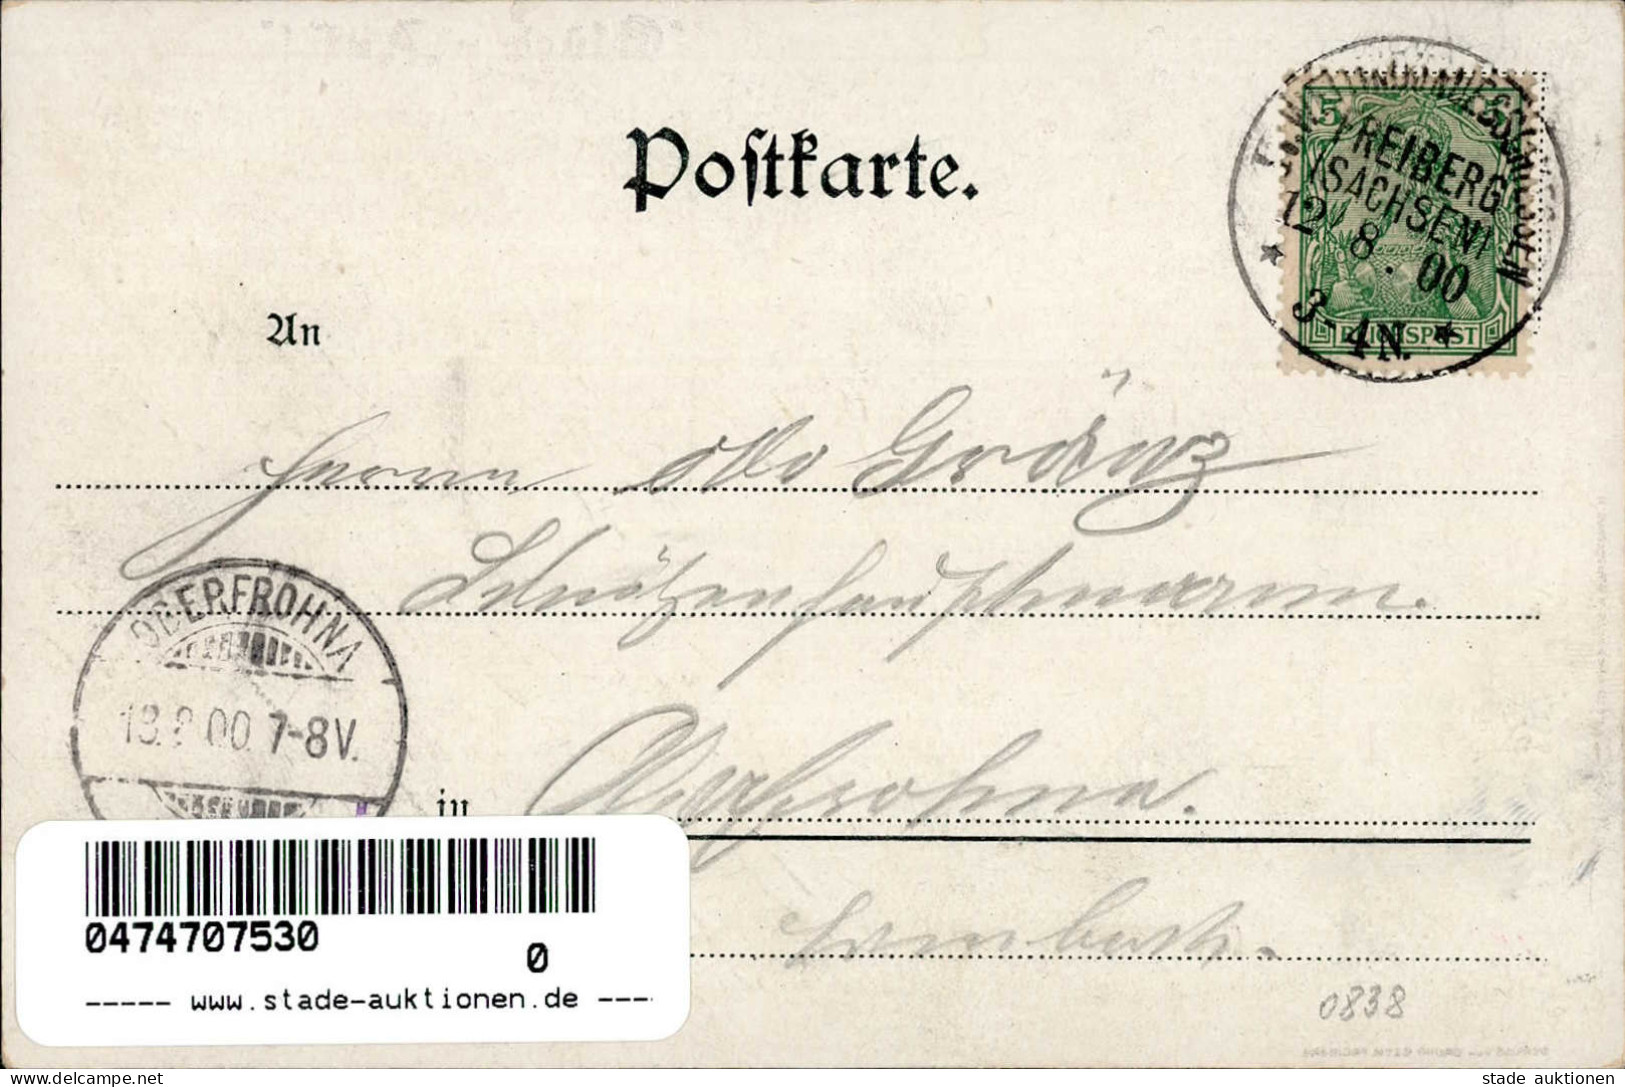 Freiberg In Sachsen (o-9200) IV. Wettin Bundesschießen  12. Bis 19. August 1900 Sonderstempel I- - Andere & Zonder Classificatie